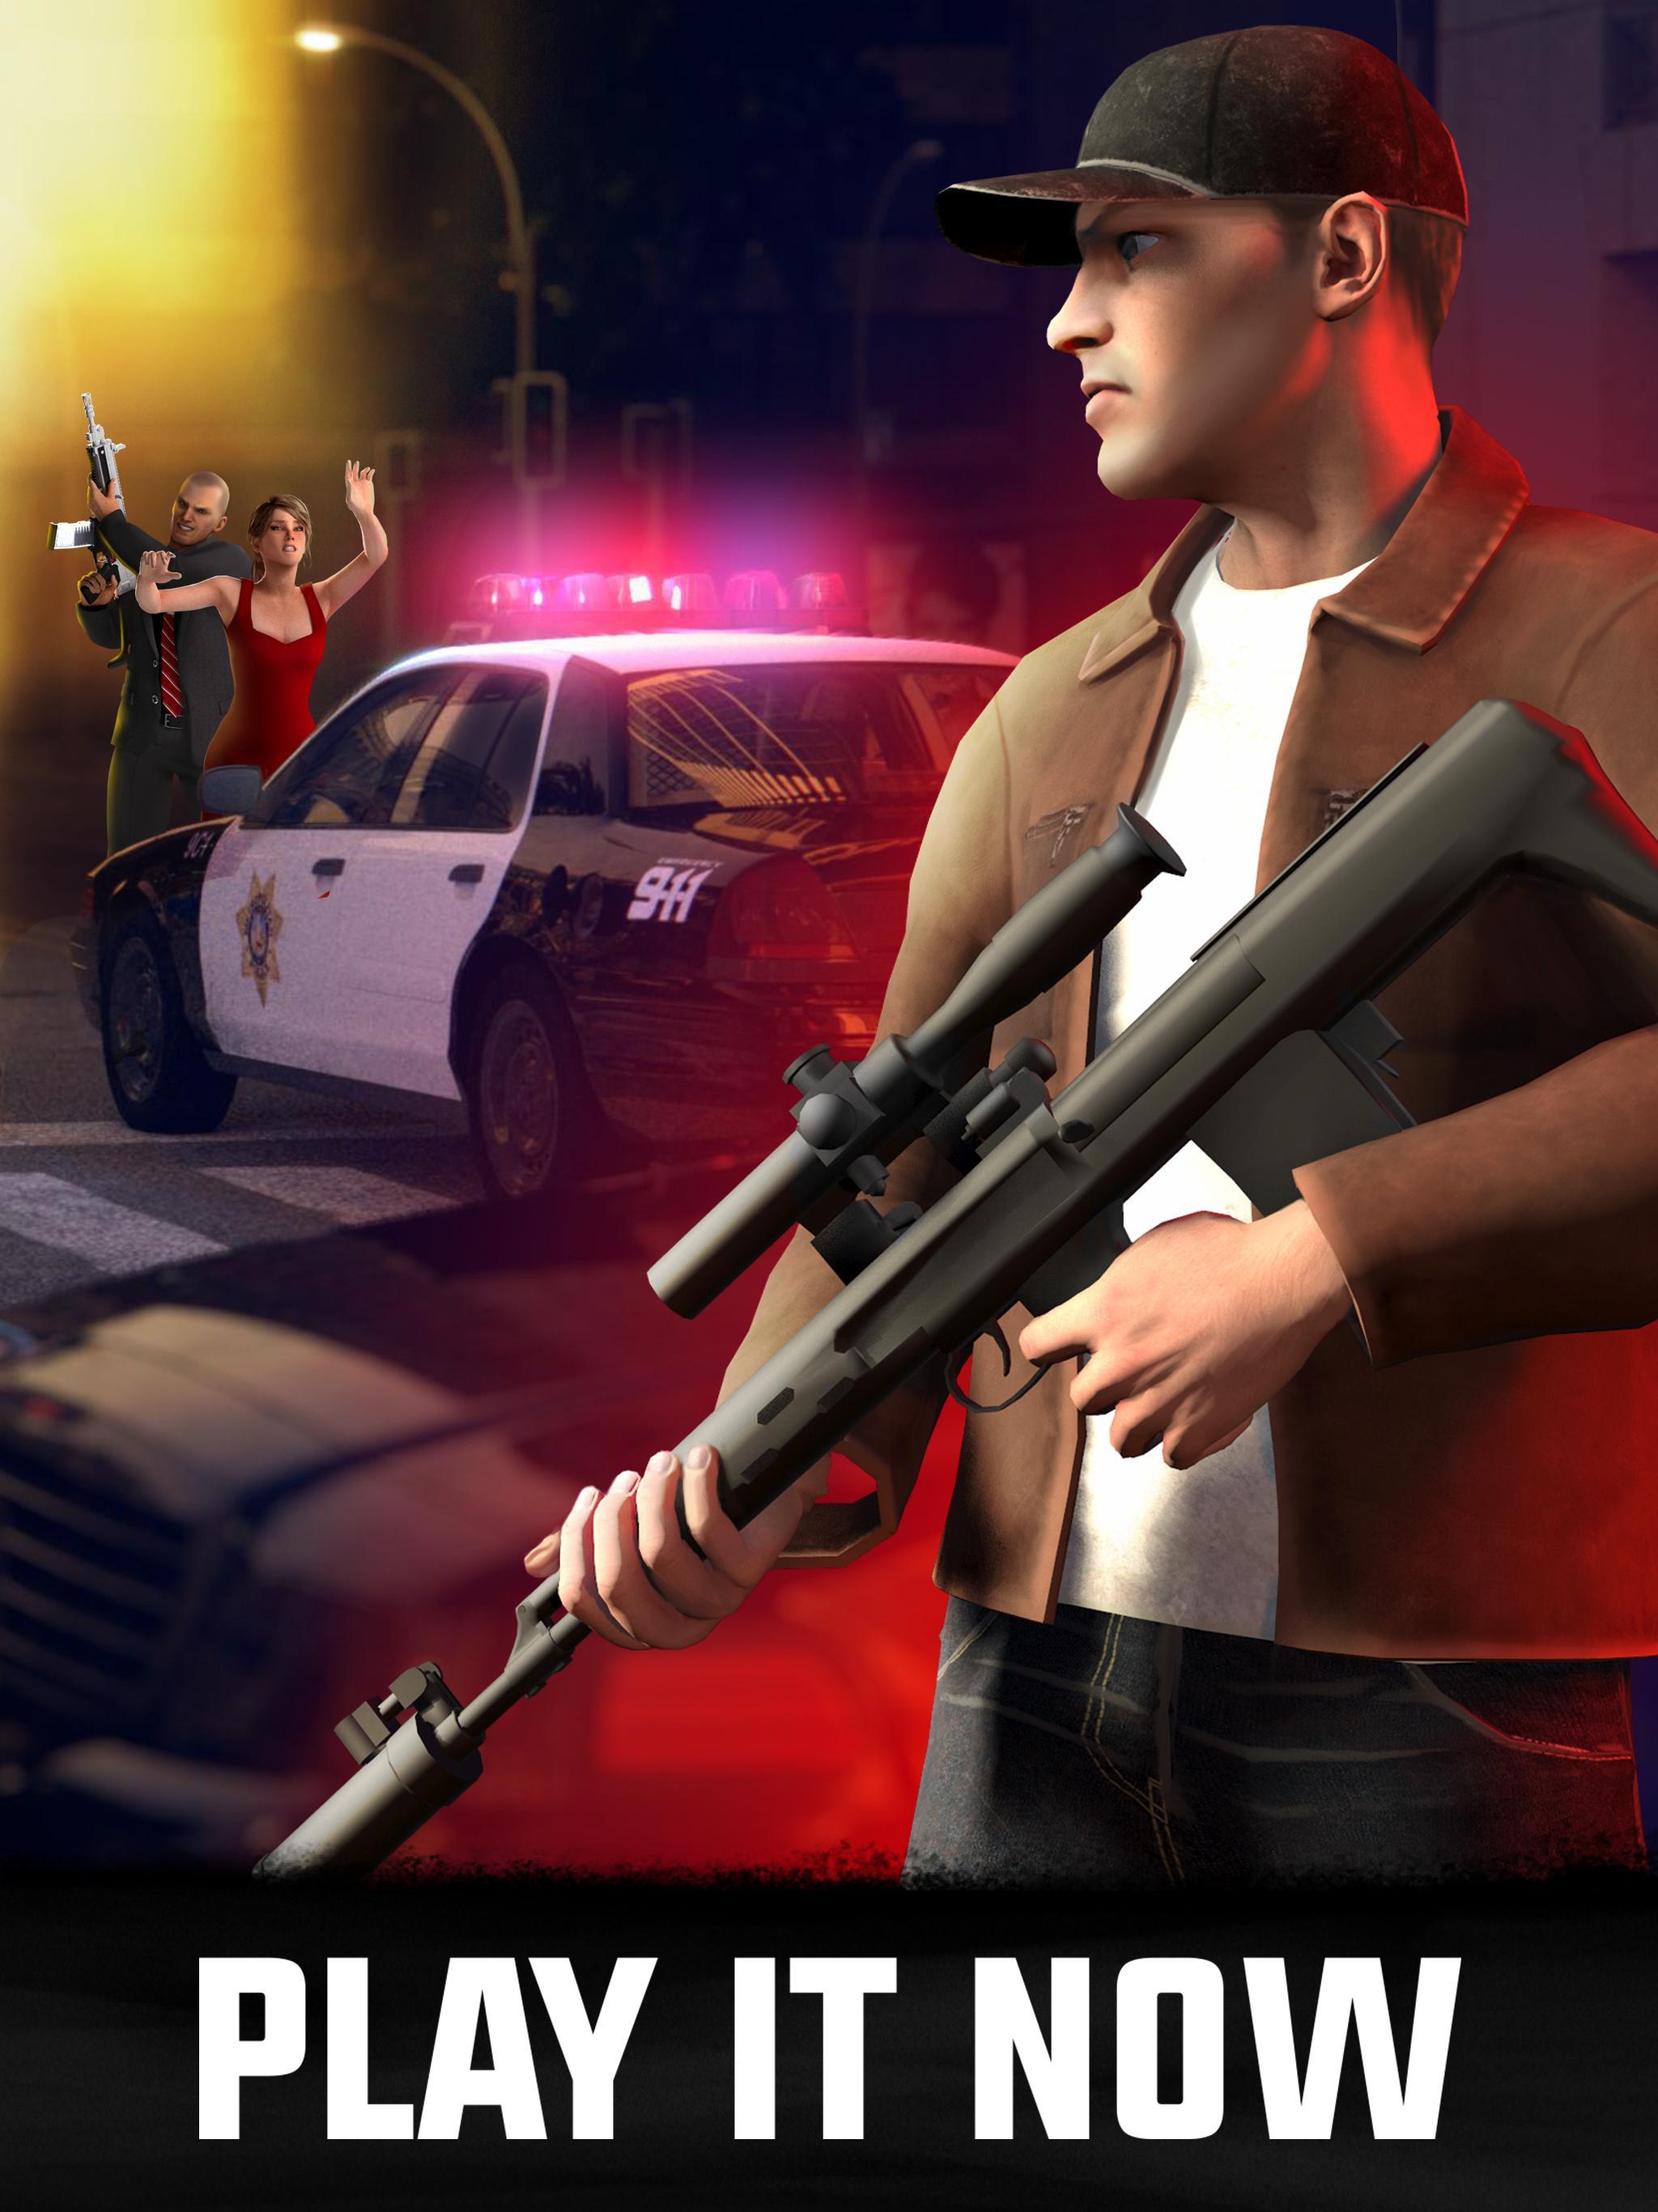 Sniper 3D Fun Free Online FPS Shooting Game 3.15.1 Screenshot 19